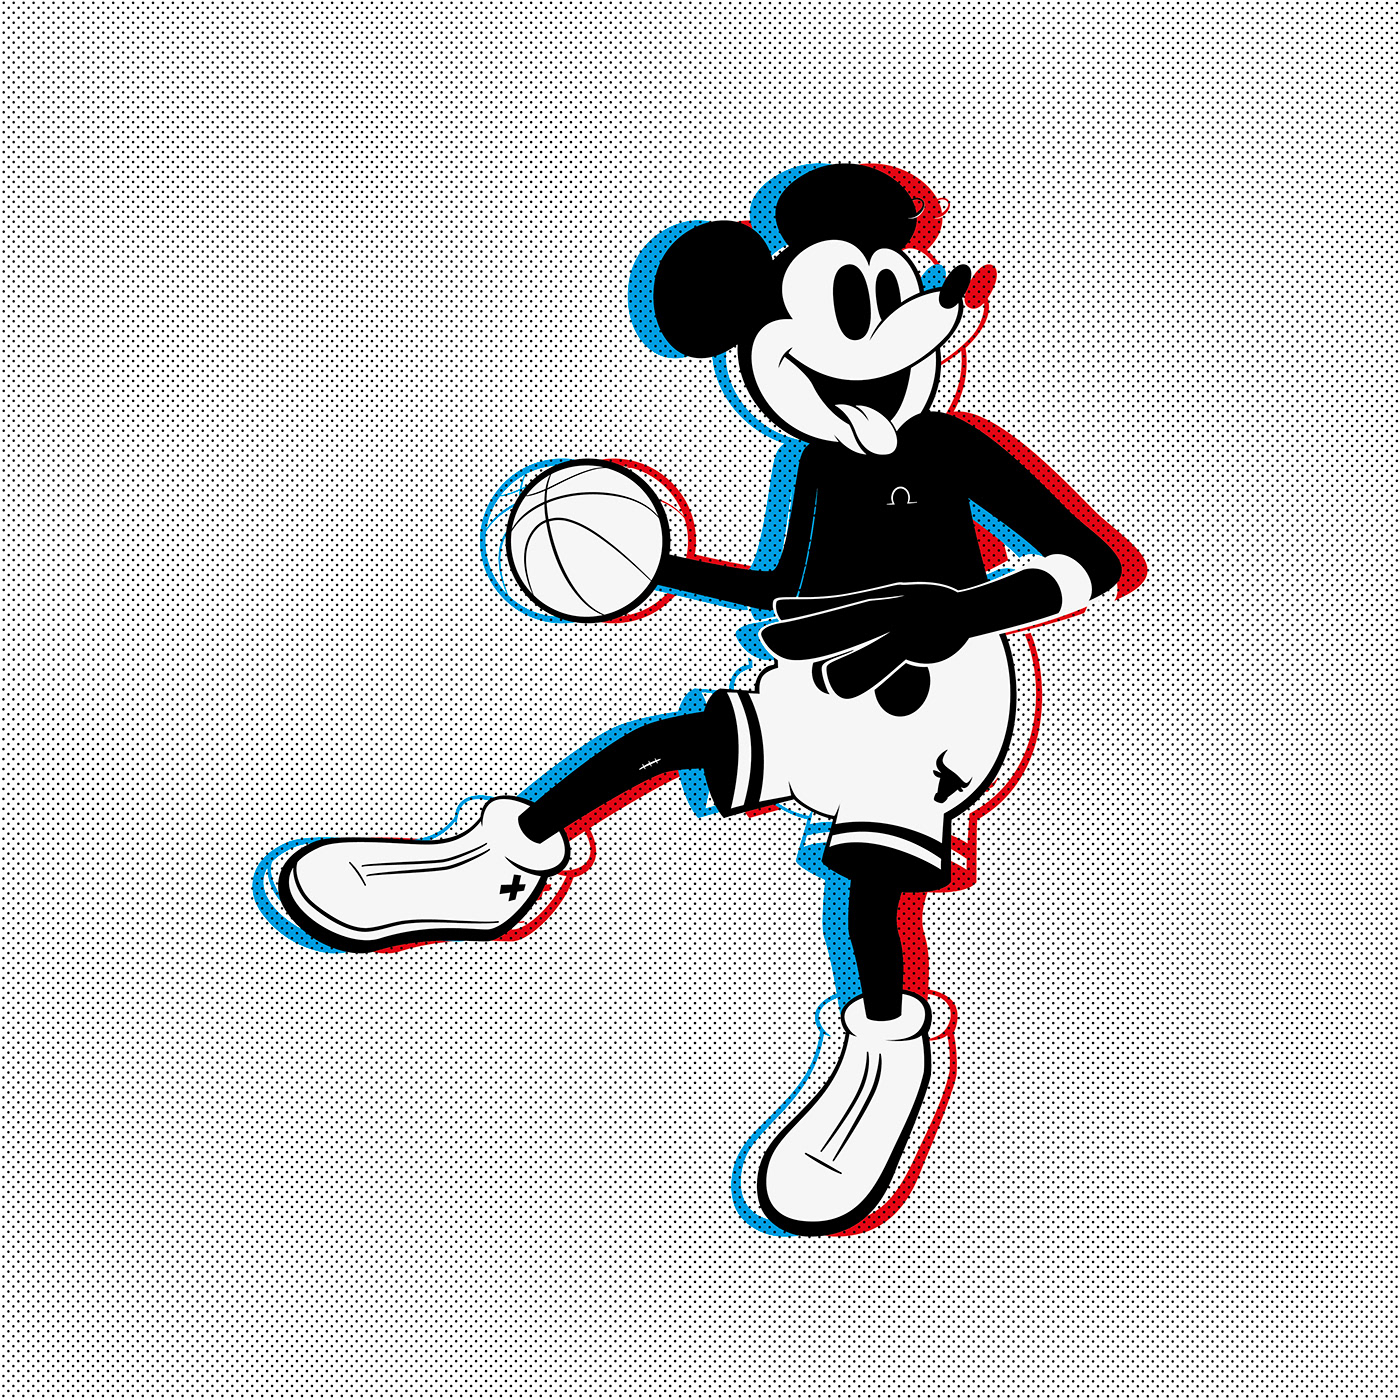 Michael Jordan mickey mouse